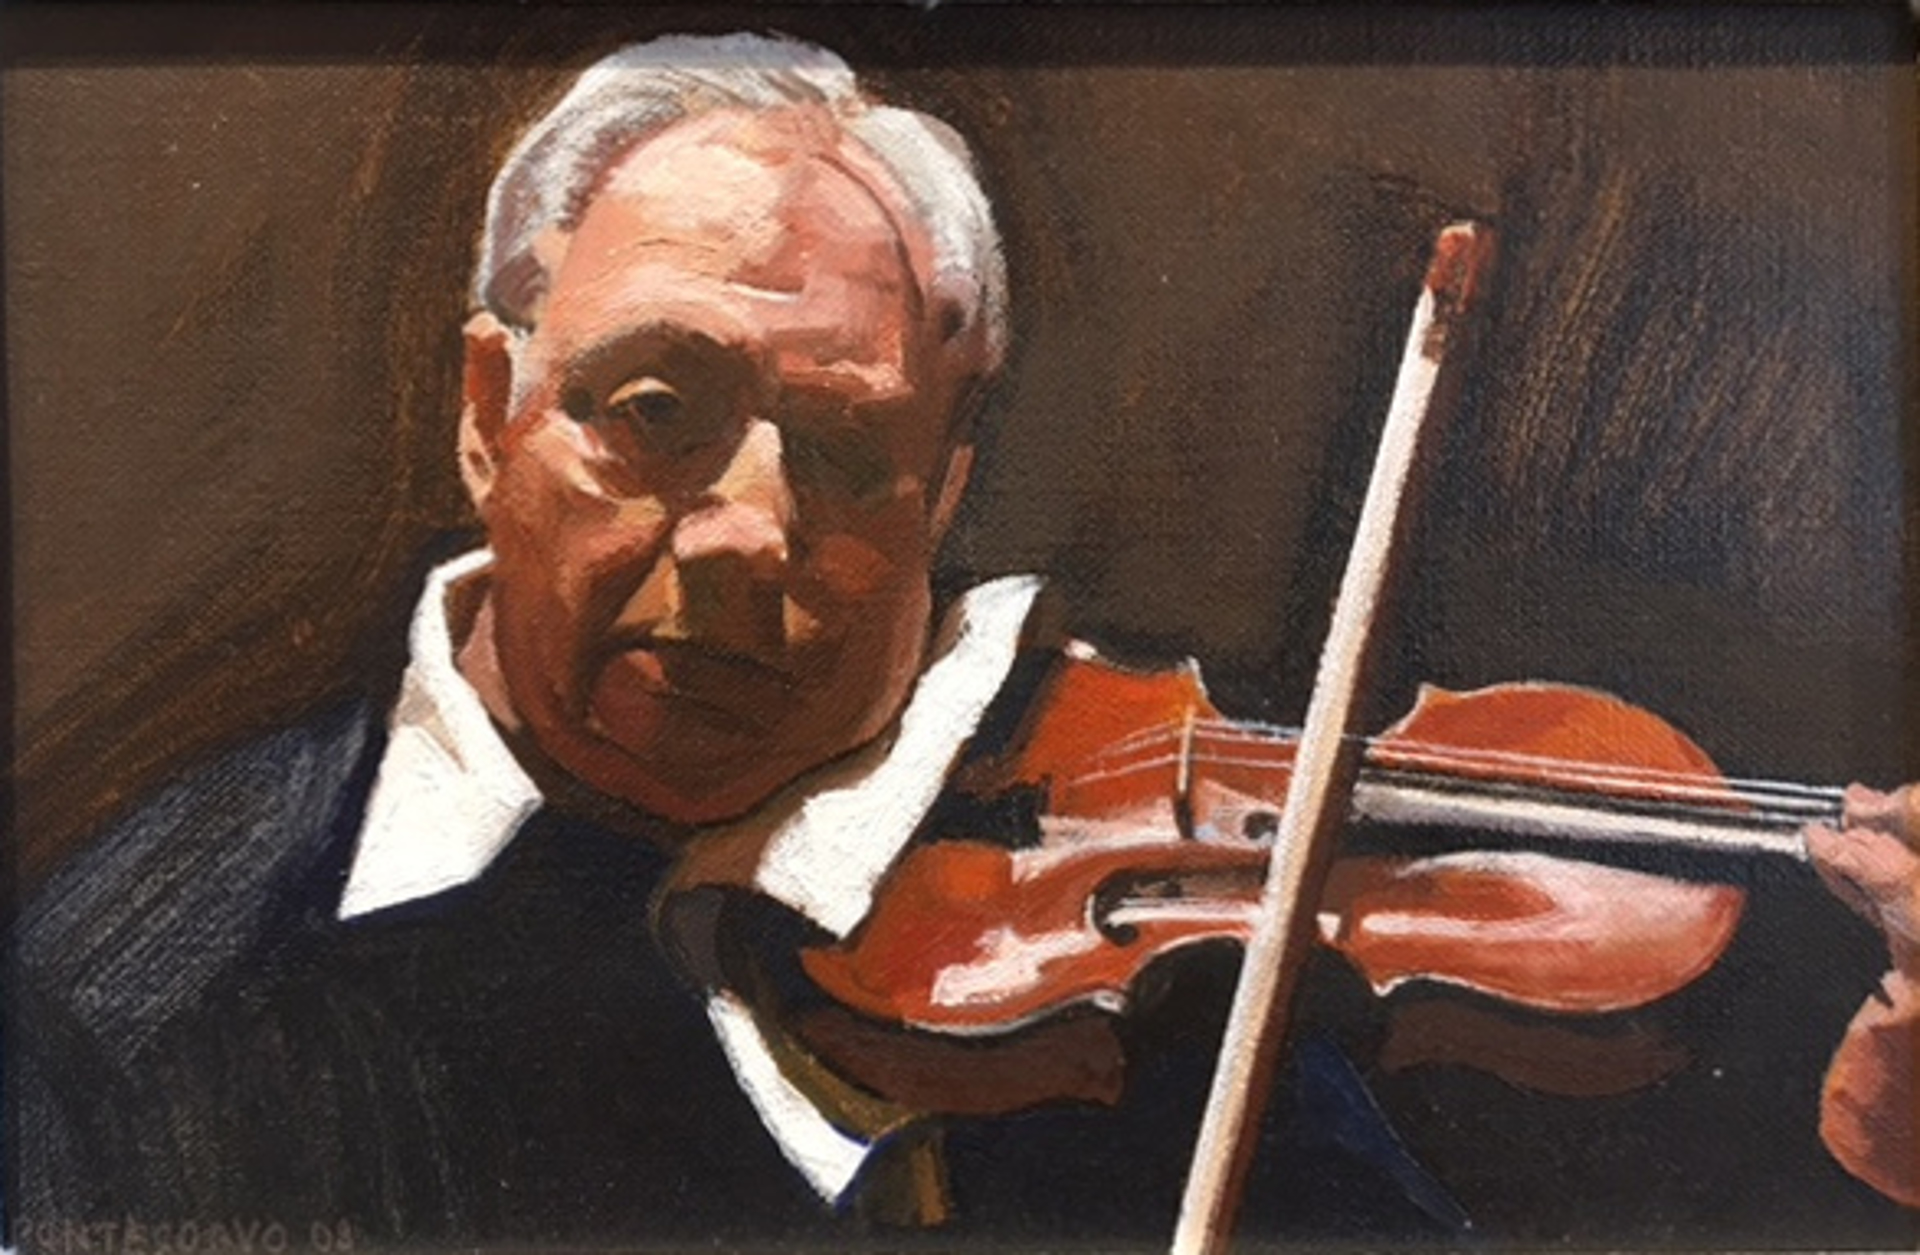 Le Violiniste by Alain Pontecorvo